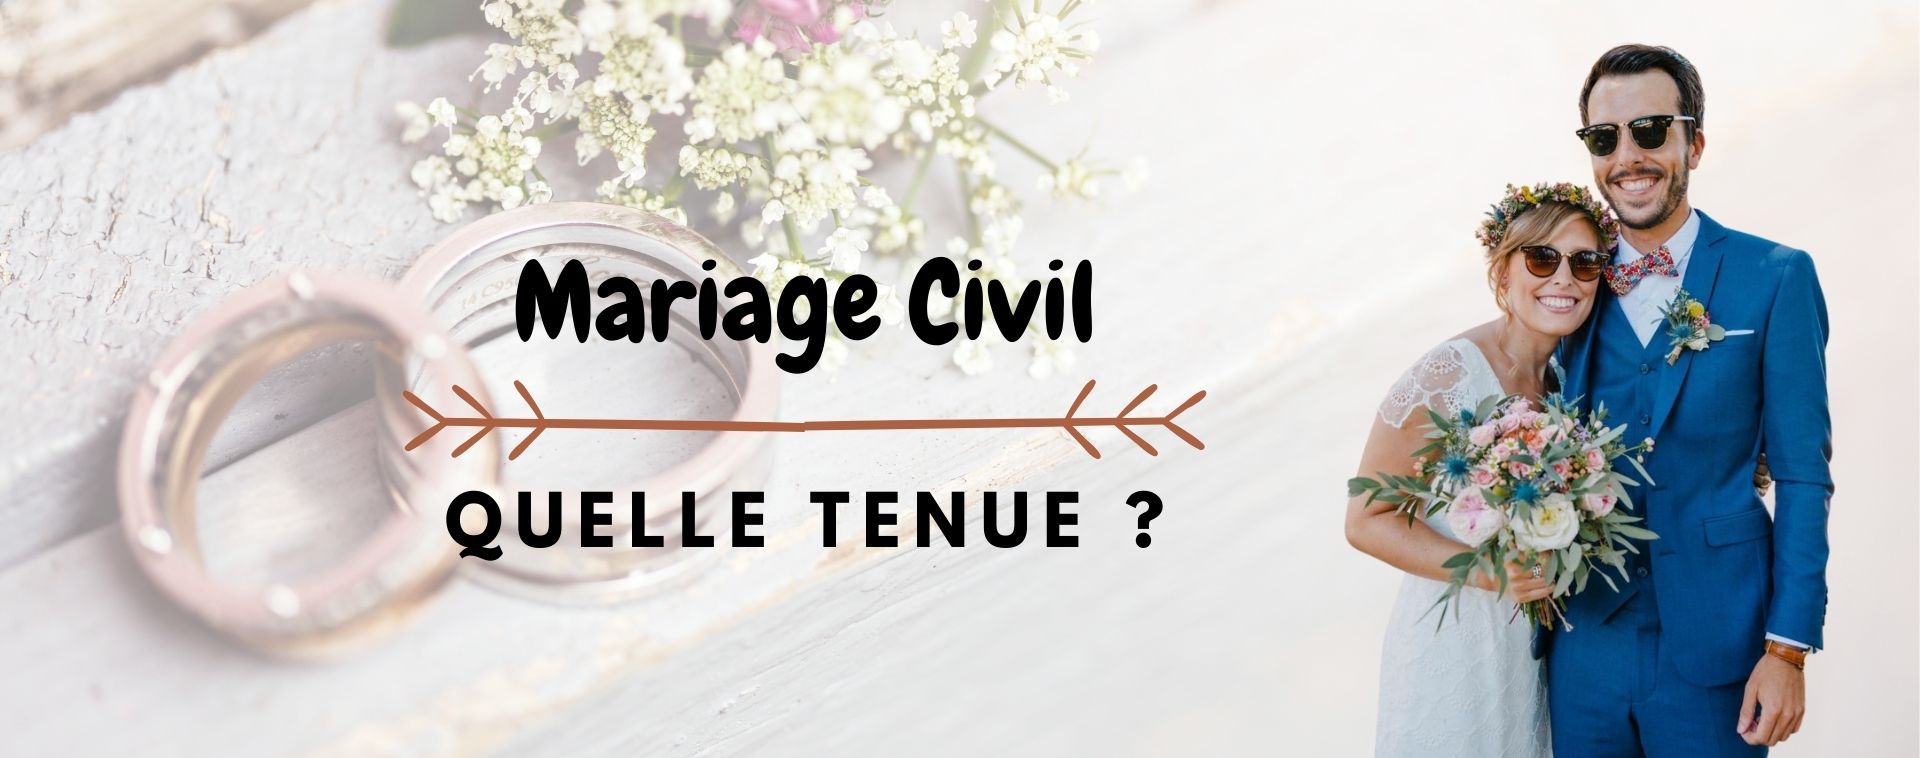 tenue mariage civil